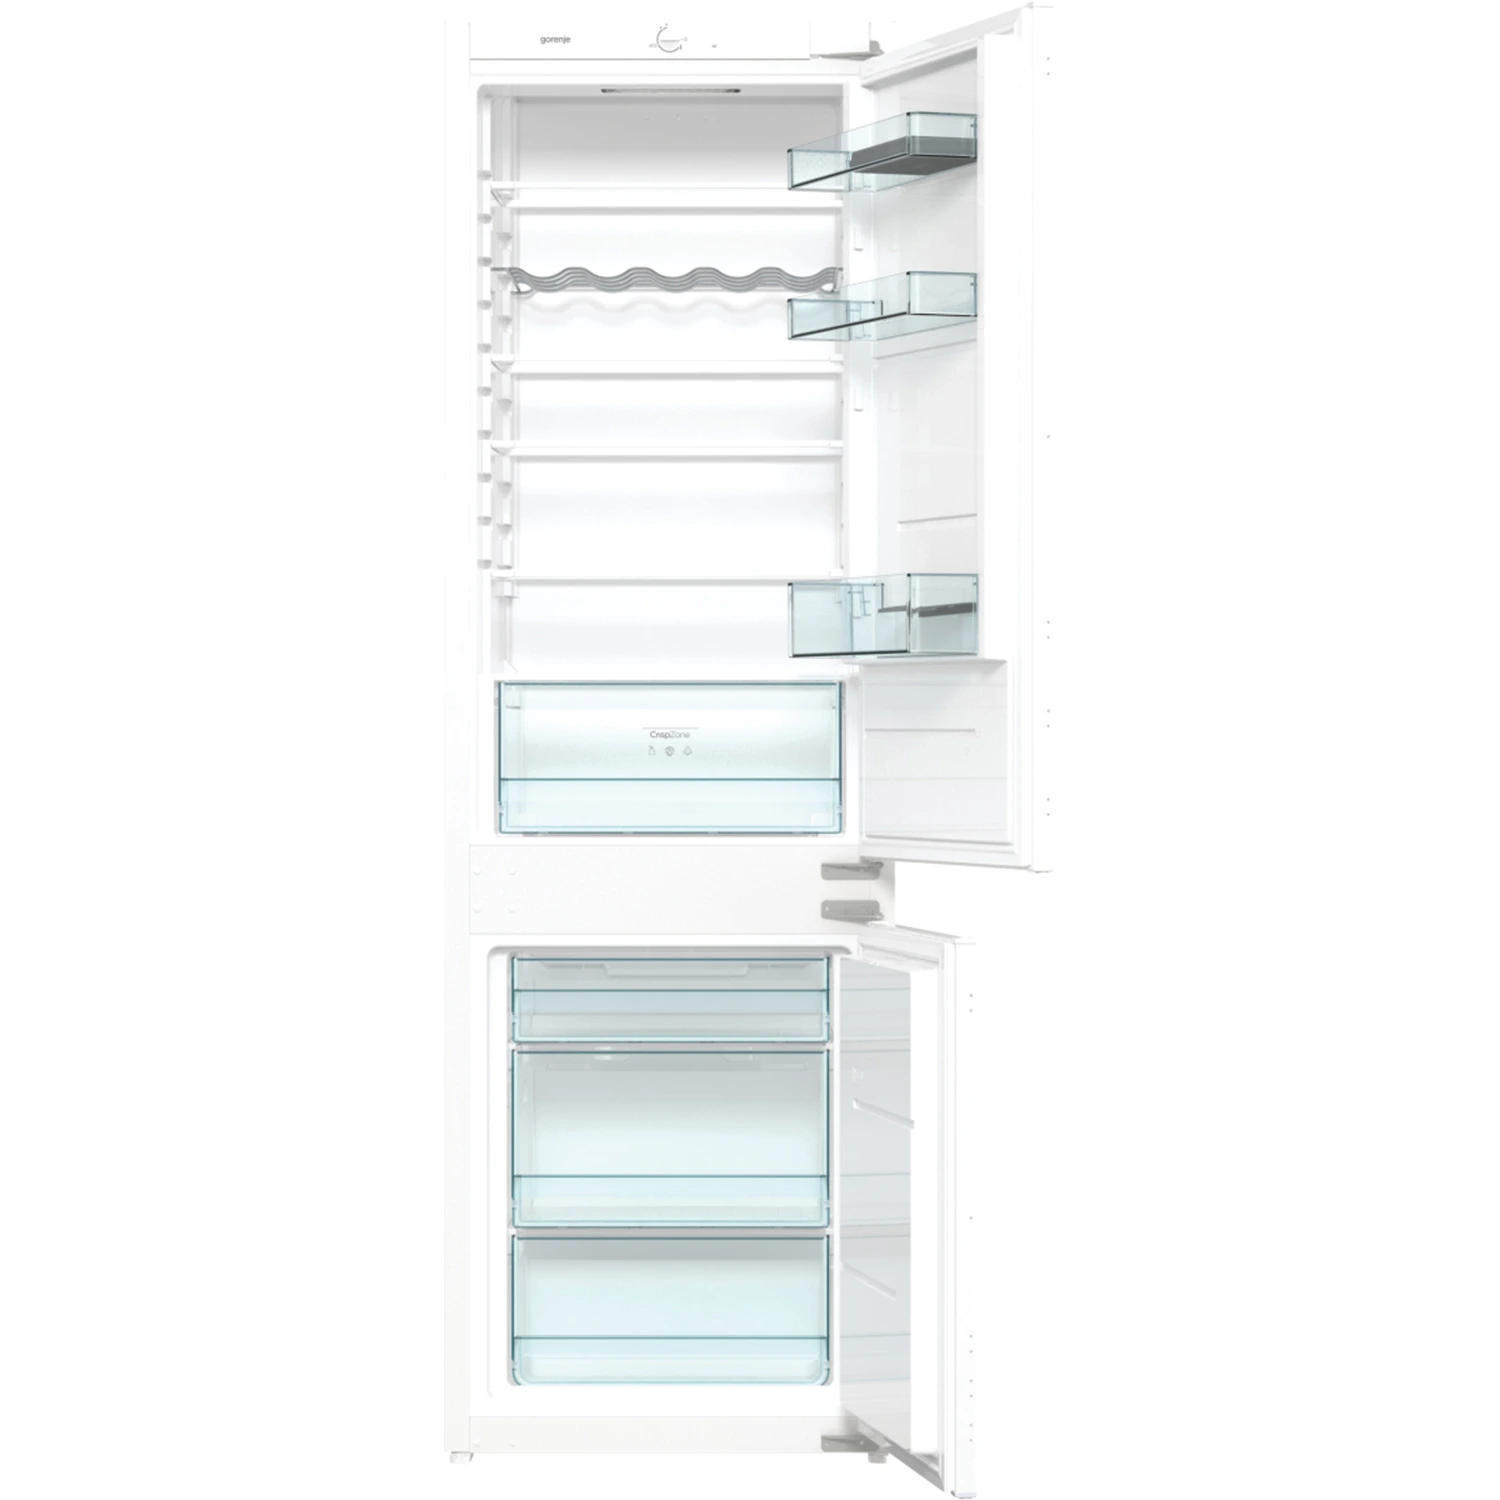 Ugradbeni kombinovani frižider sa FrostLess tehnologijom za manje nakupljanje leda.